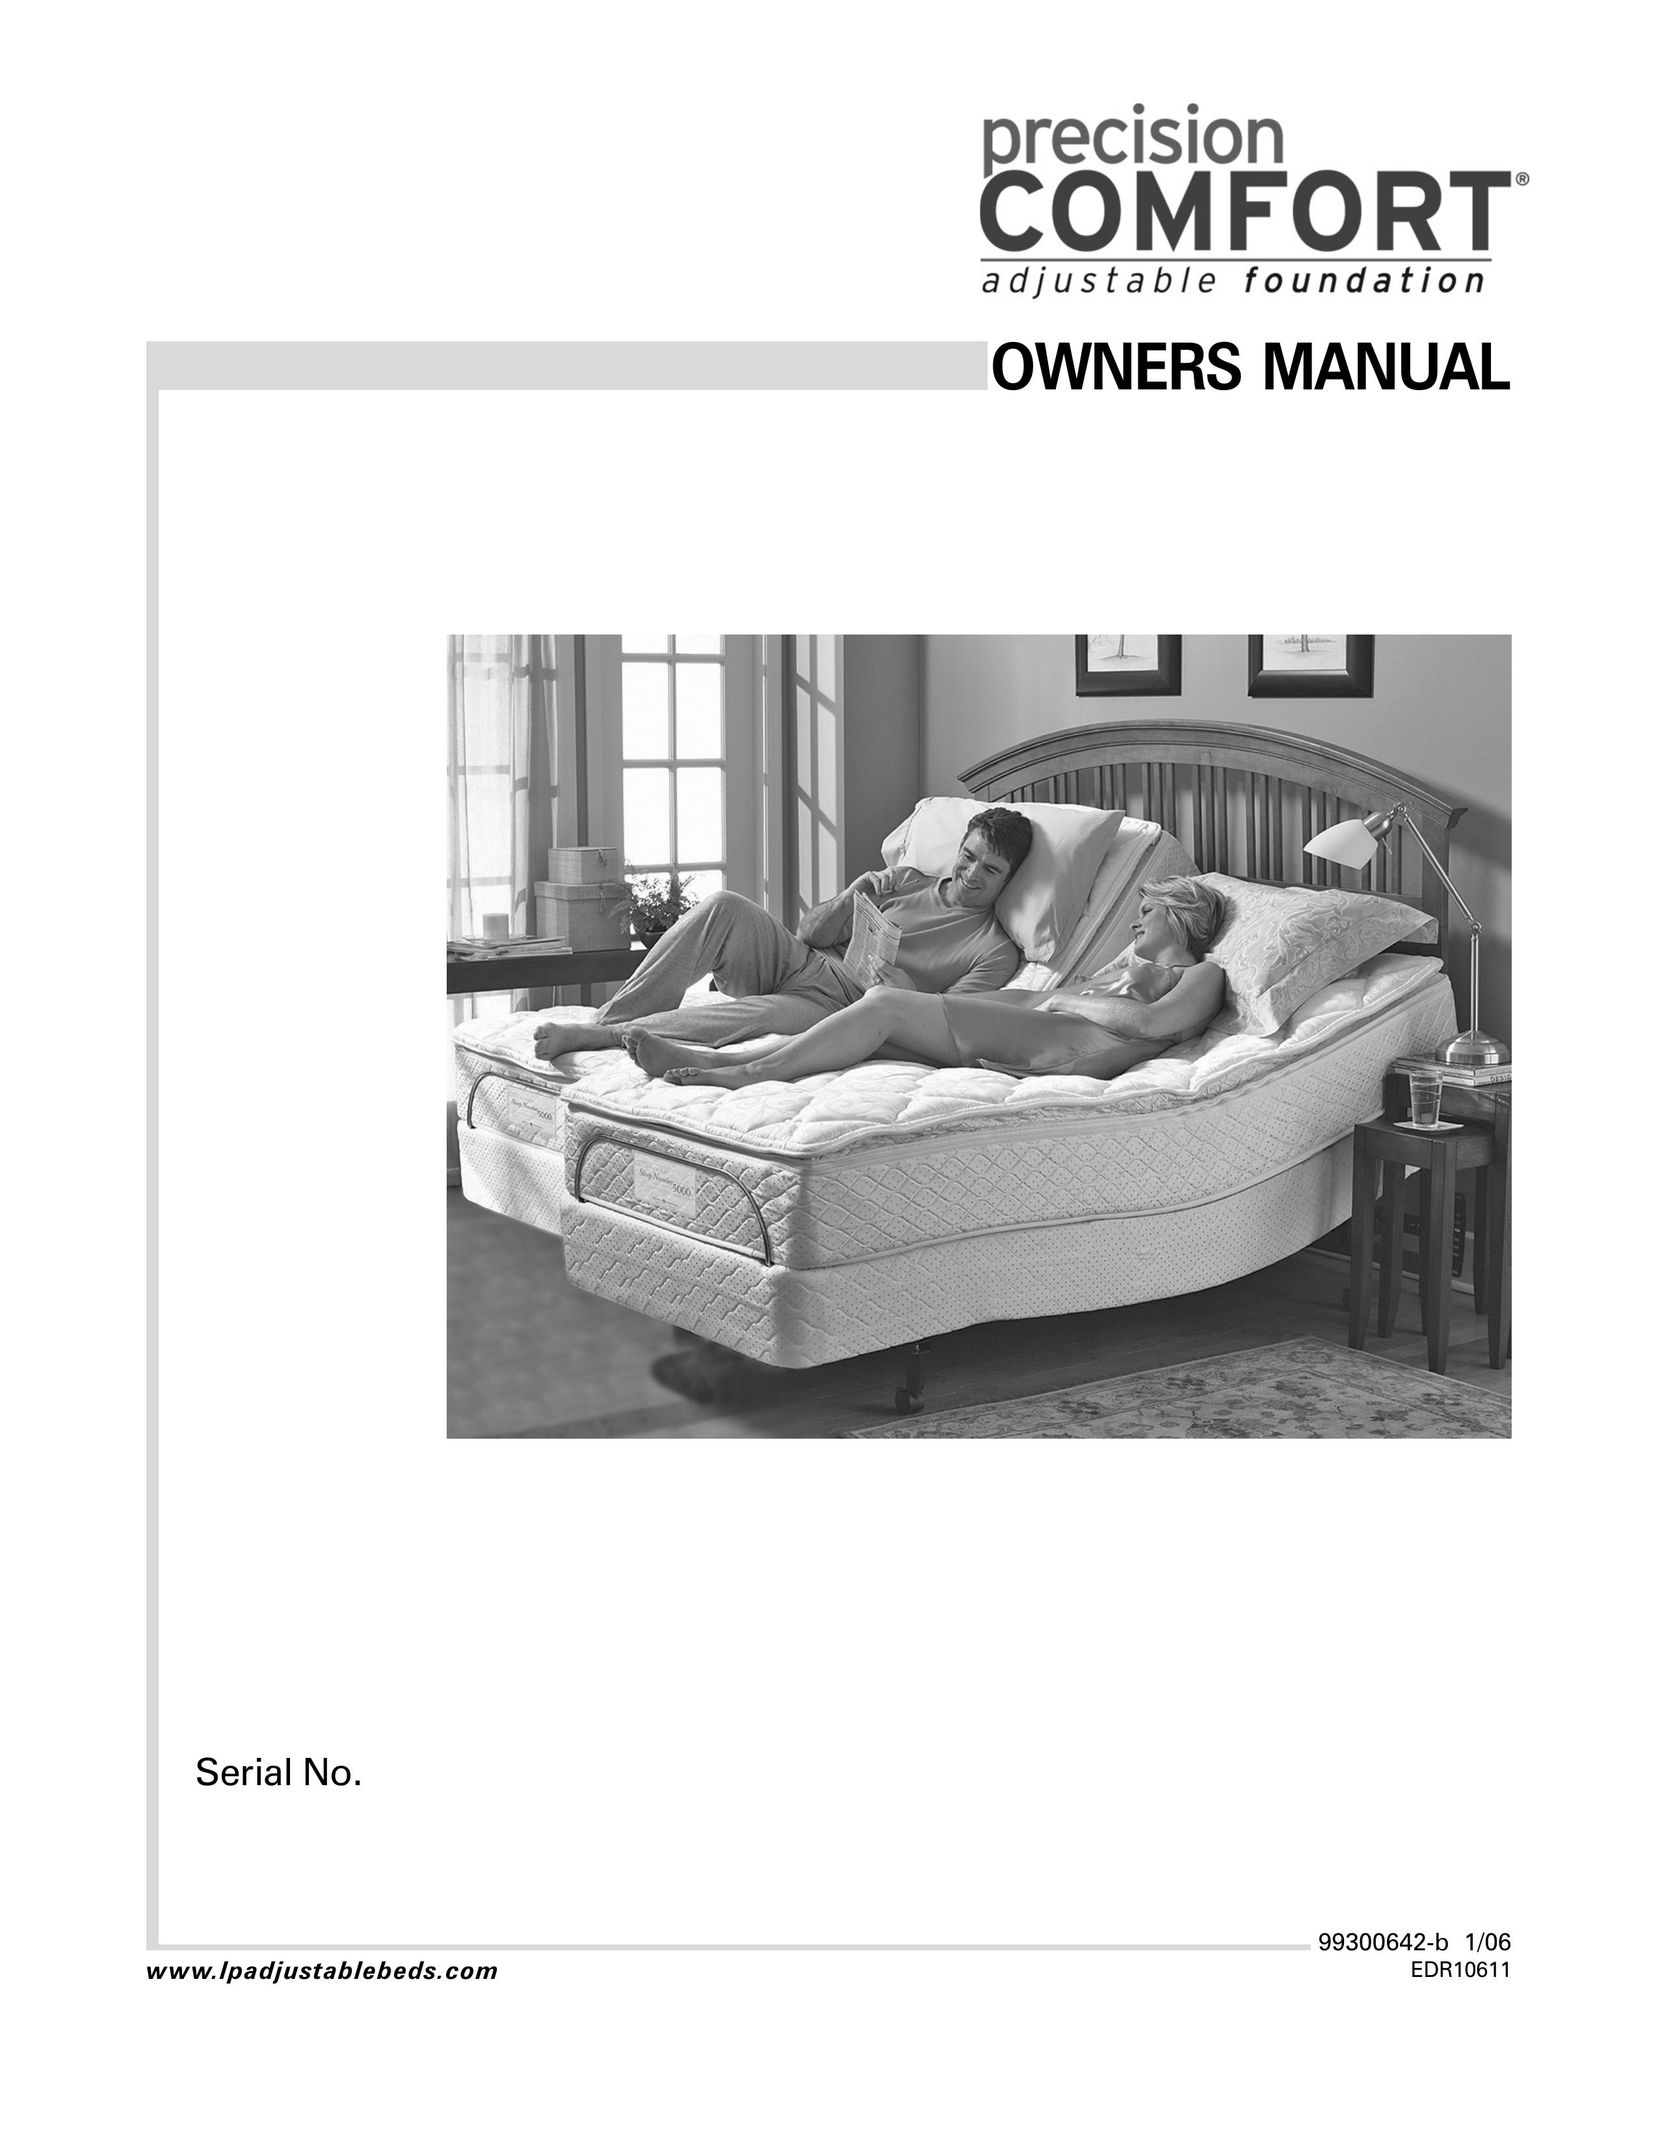 Select Comfort Precision Comfort Adjustable Foundation Indoor Furnishings User Manual